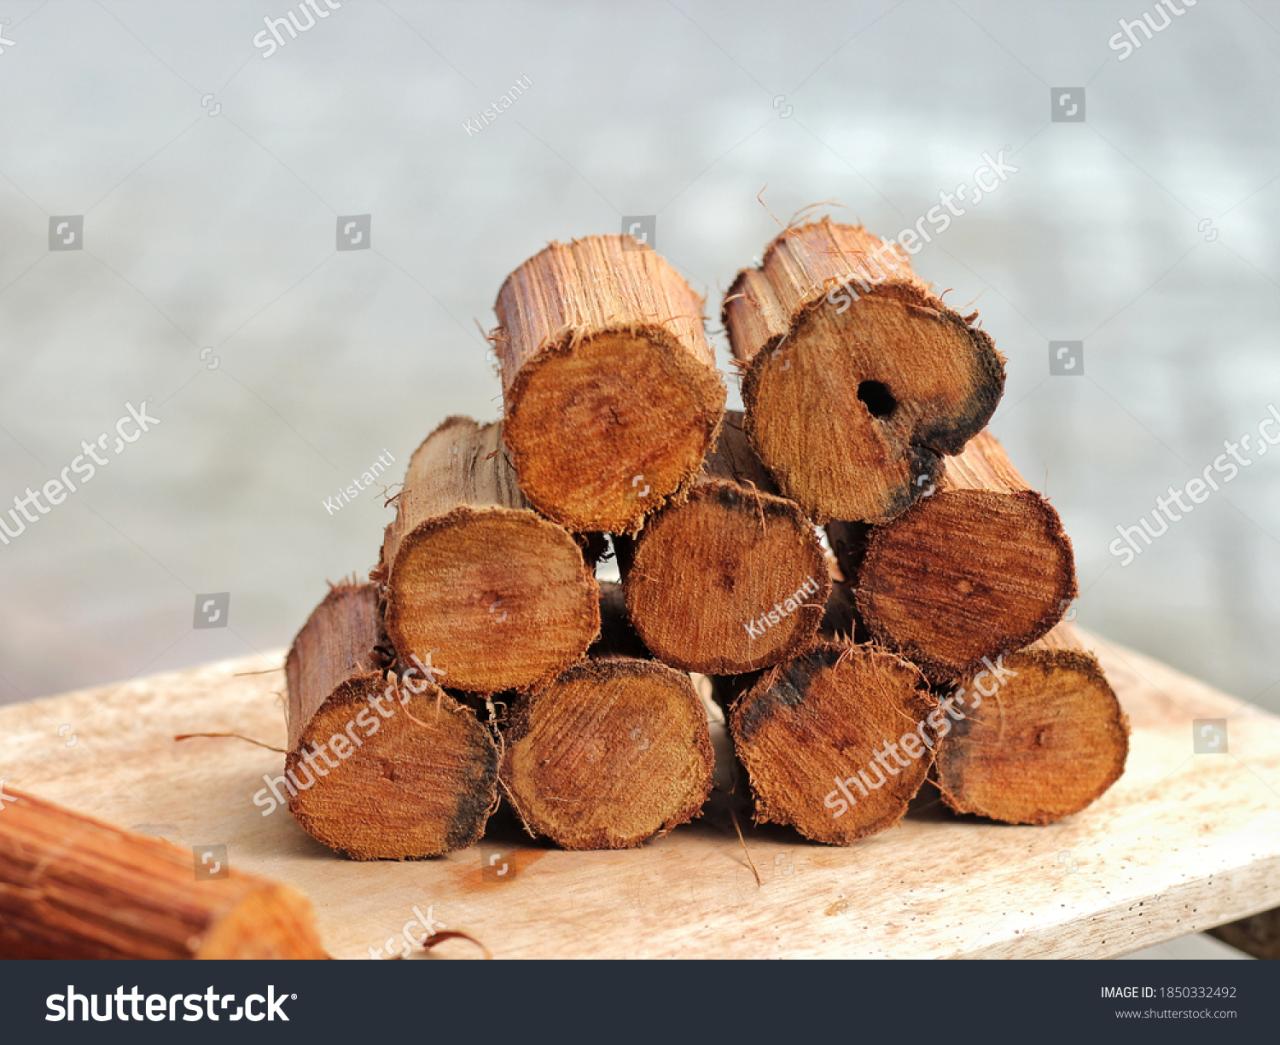 Manfaat kayu bajakah untuk asam lambung